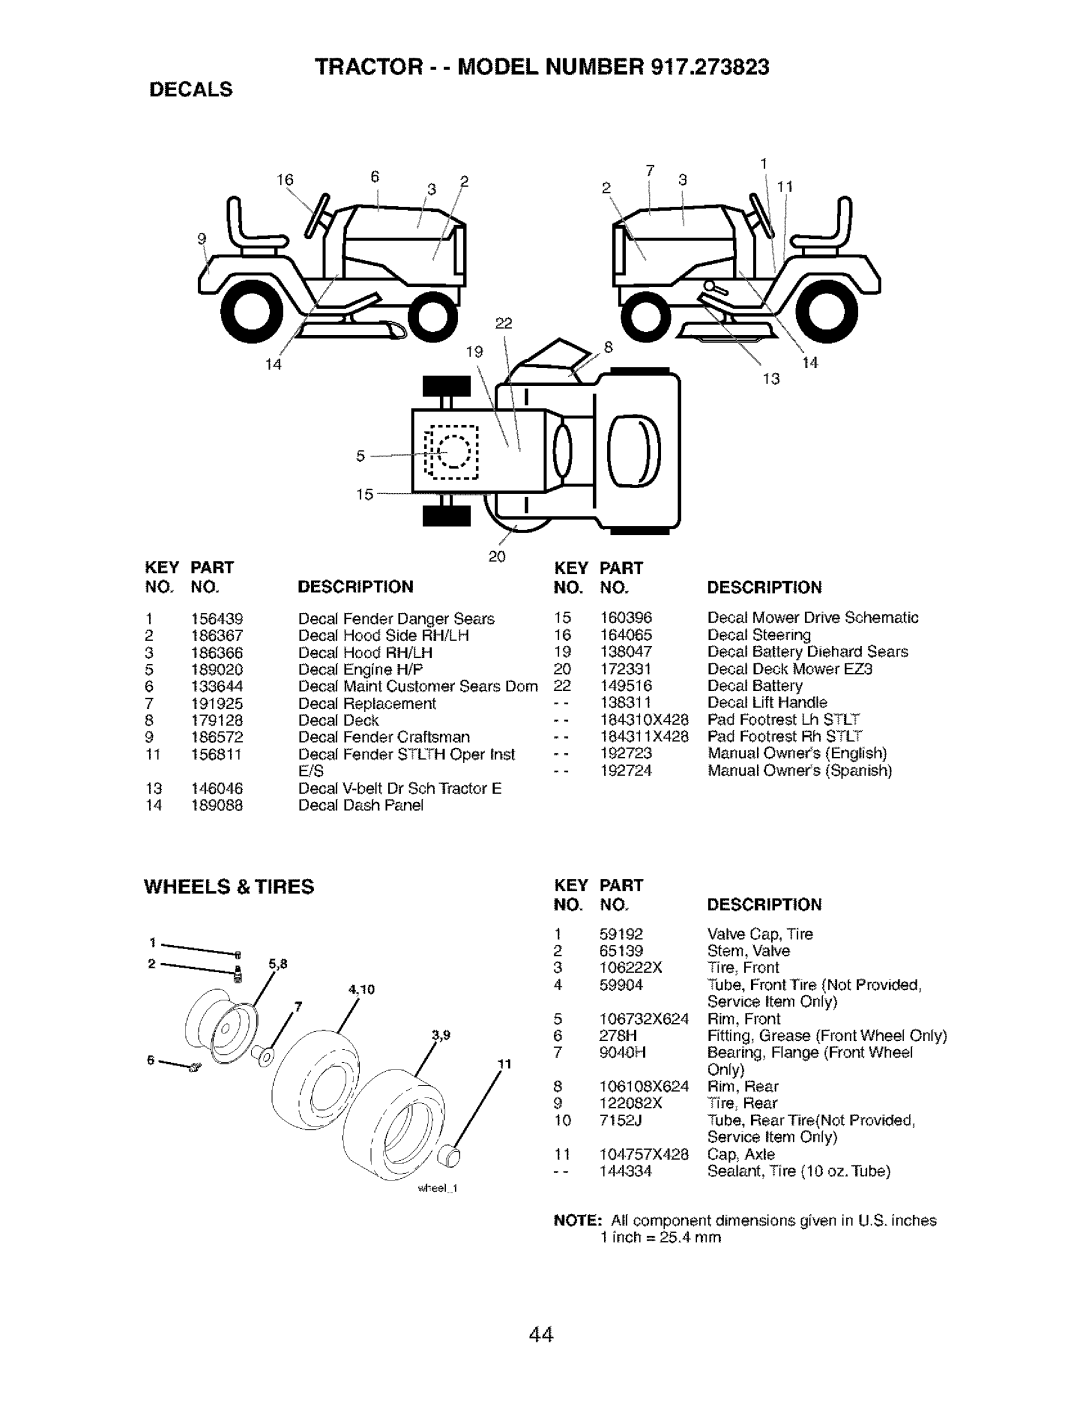 Craftsman 917.273823 owner manual Tractor - - Model Number Decals, Part, Wheels & Tires, Description 